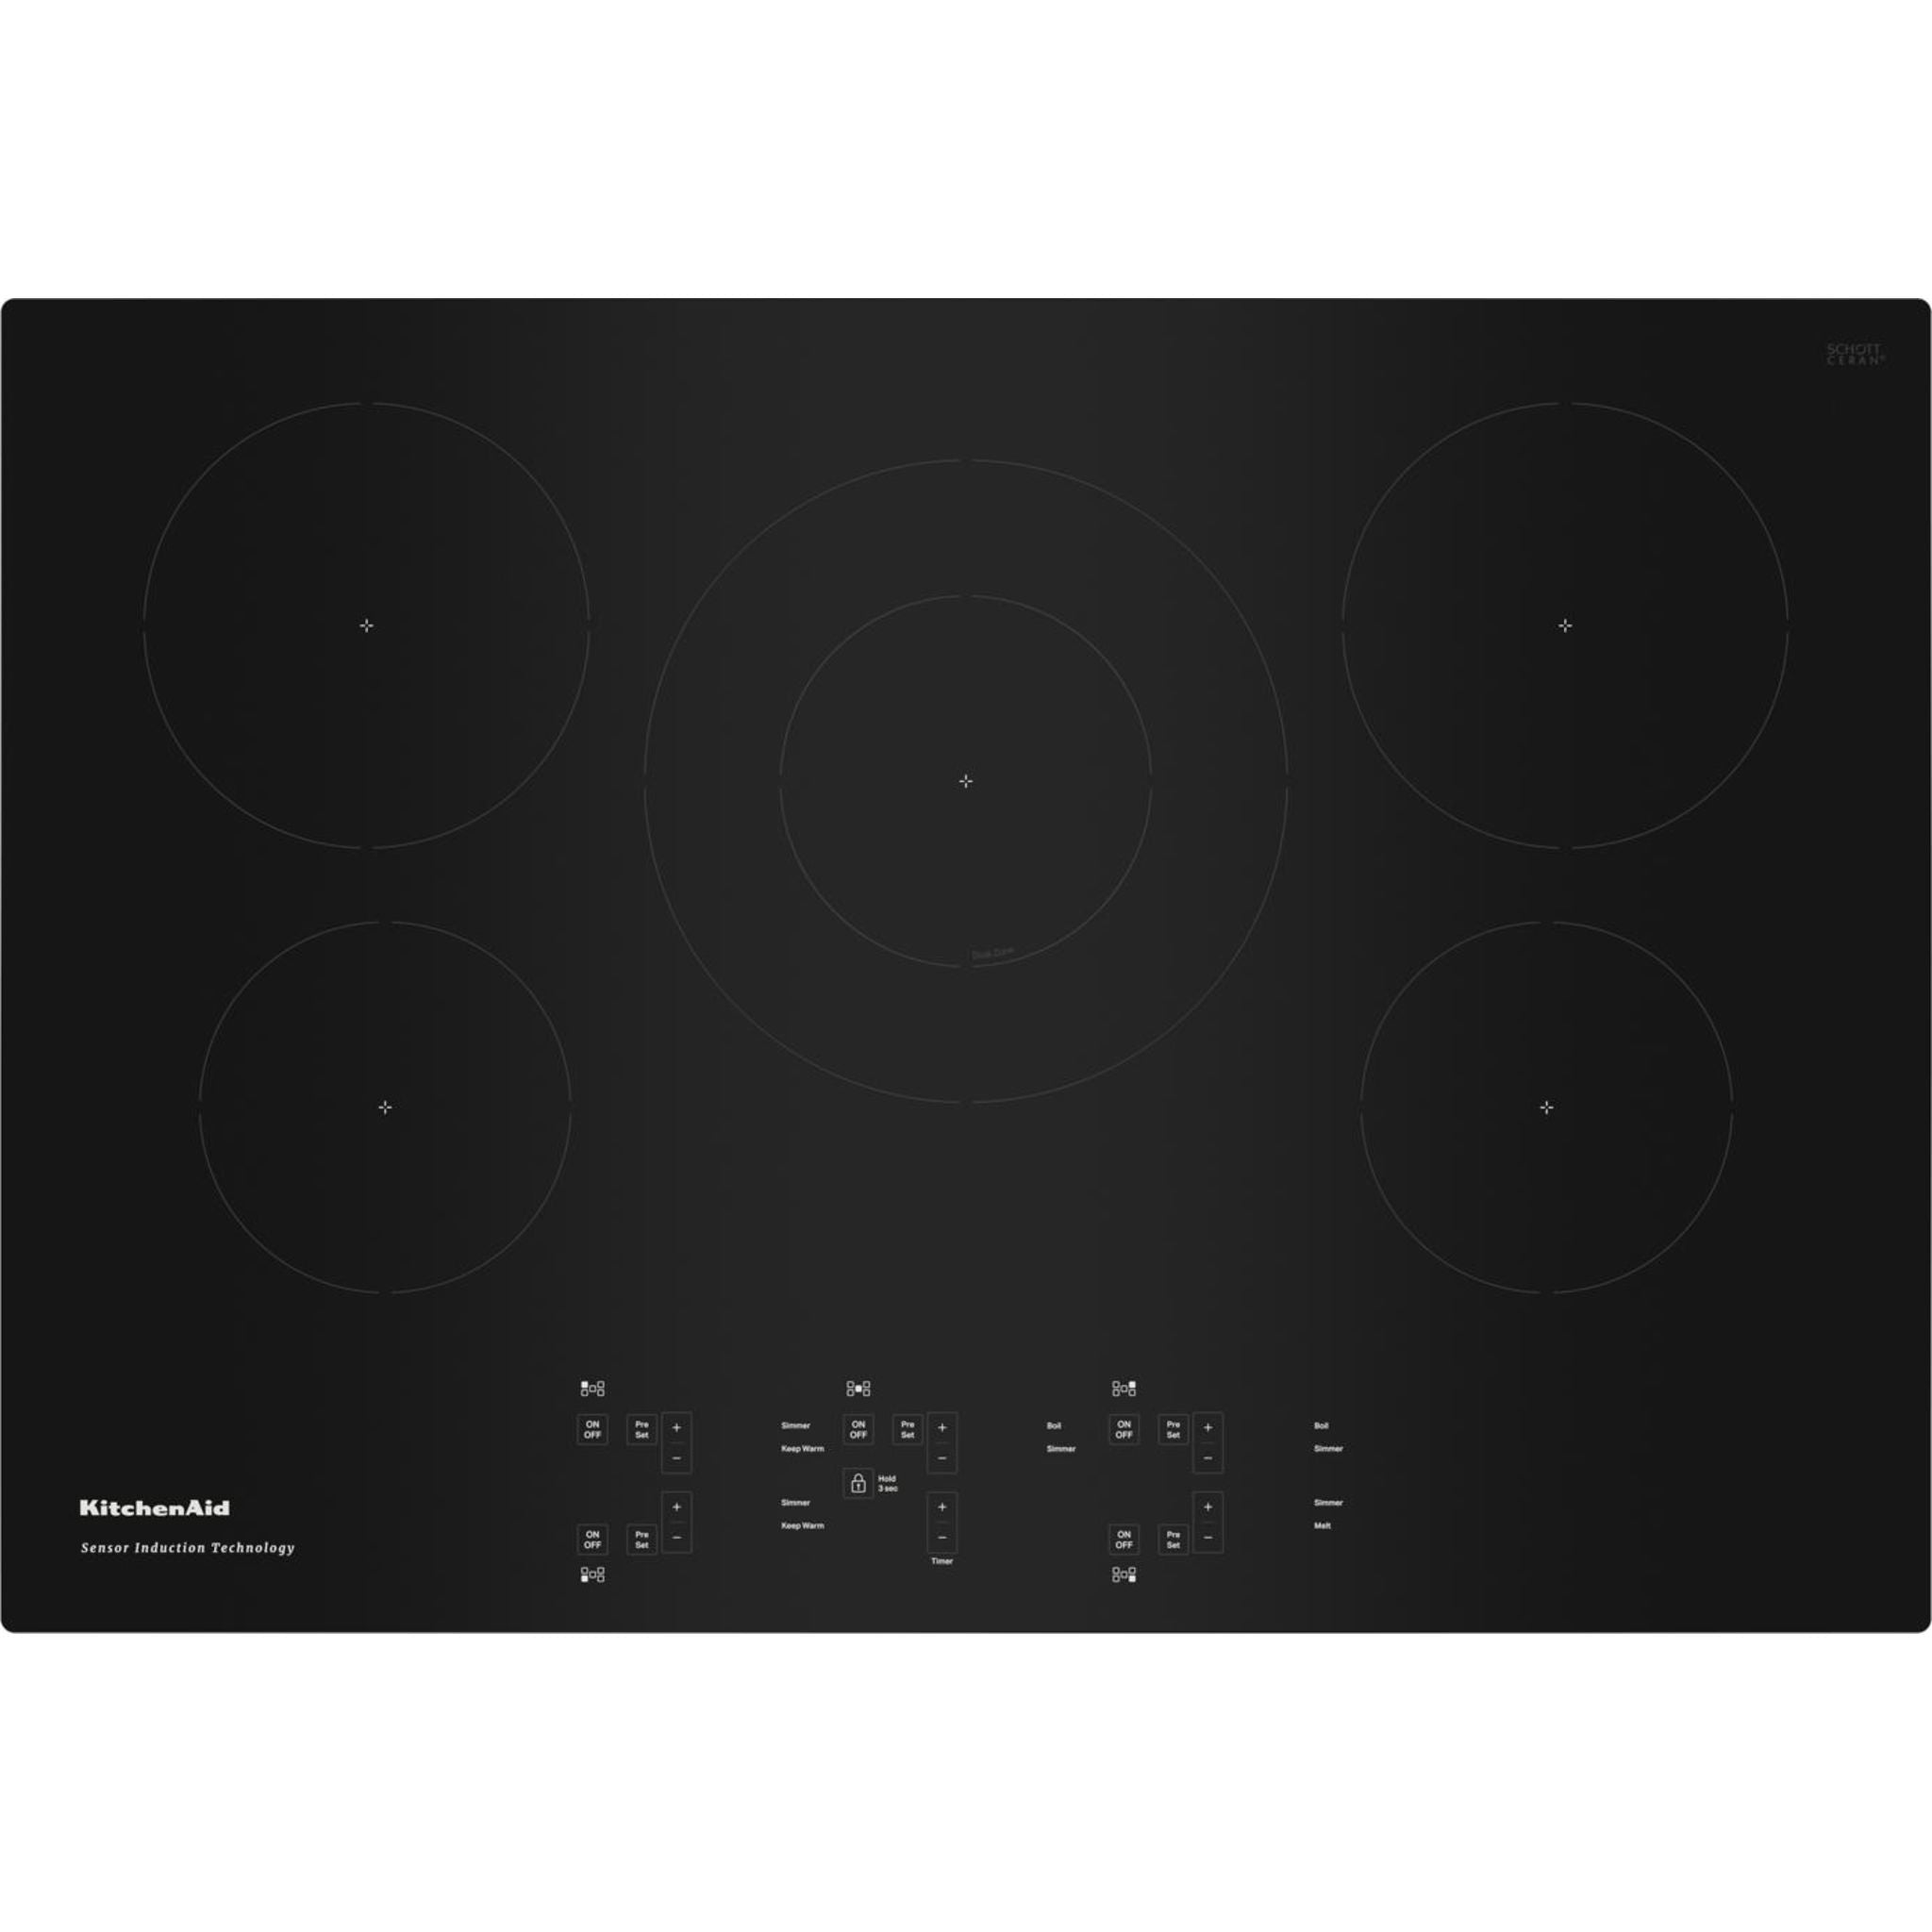 KitchenAid, KitchenAid 30" Cooktop (KCIG550JBL) - Black